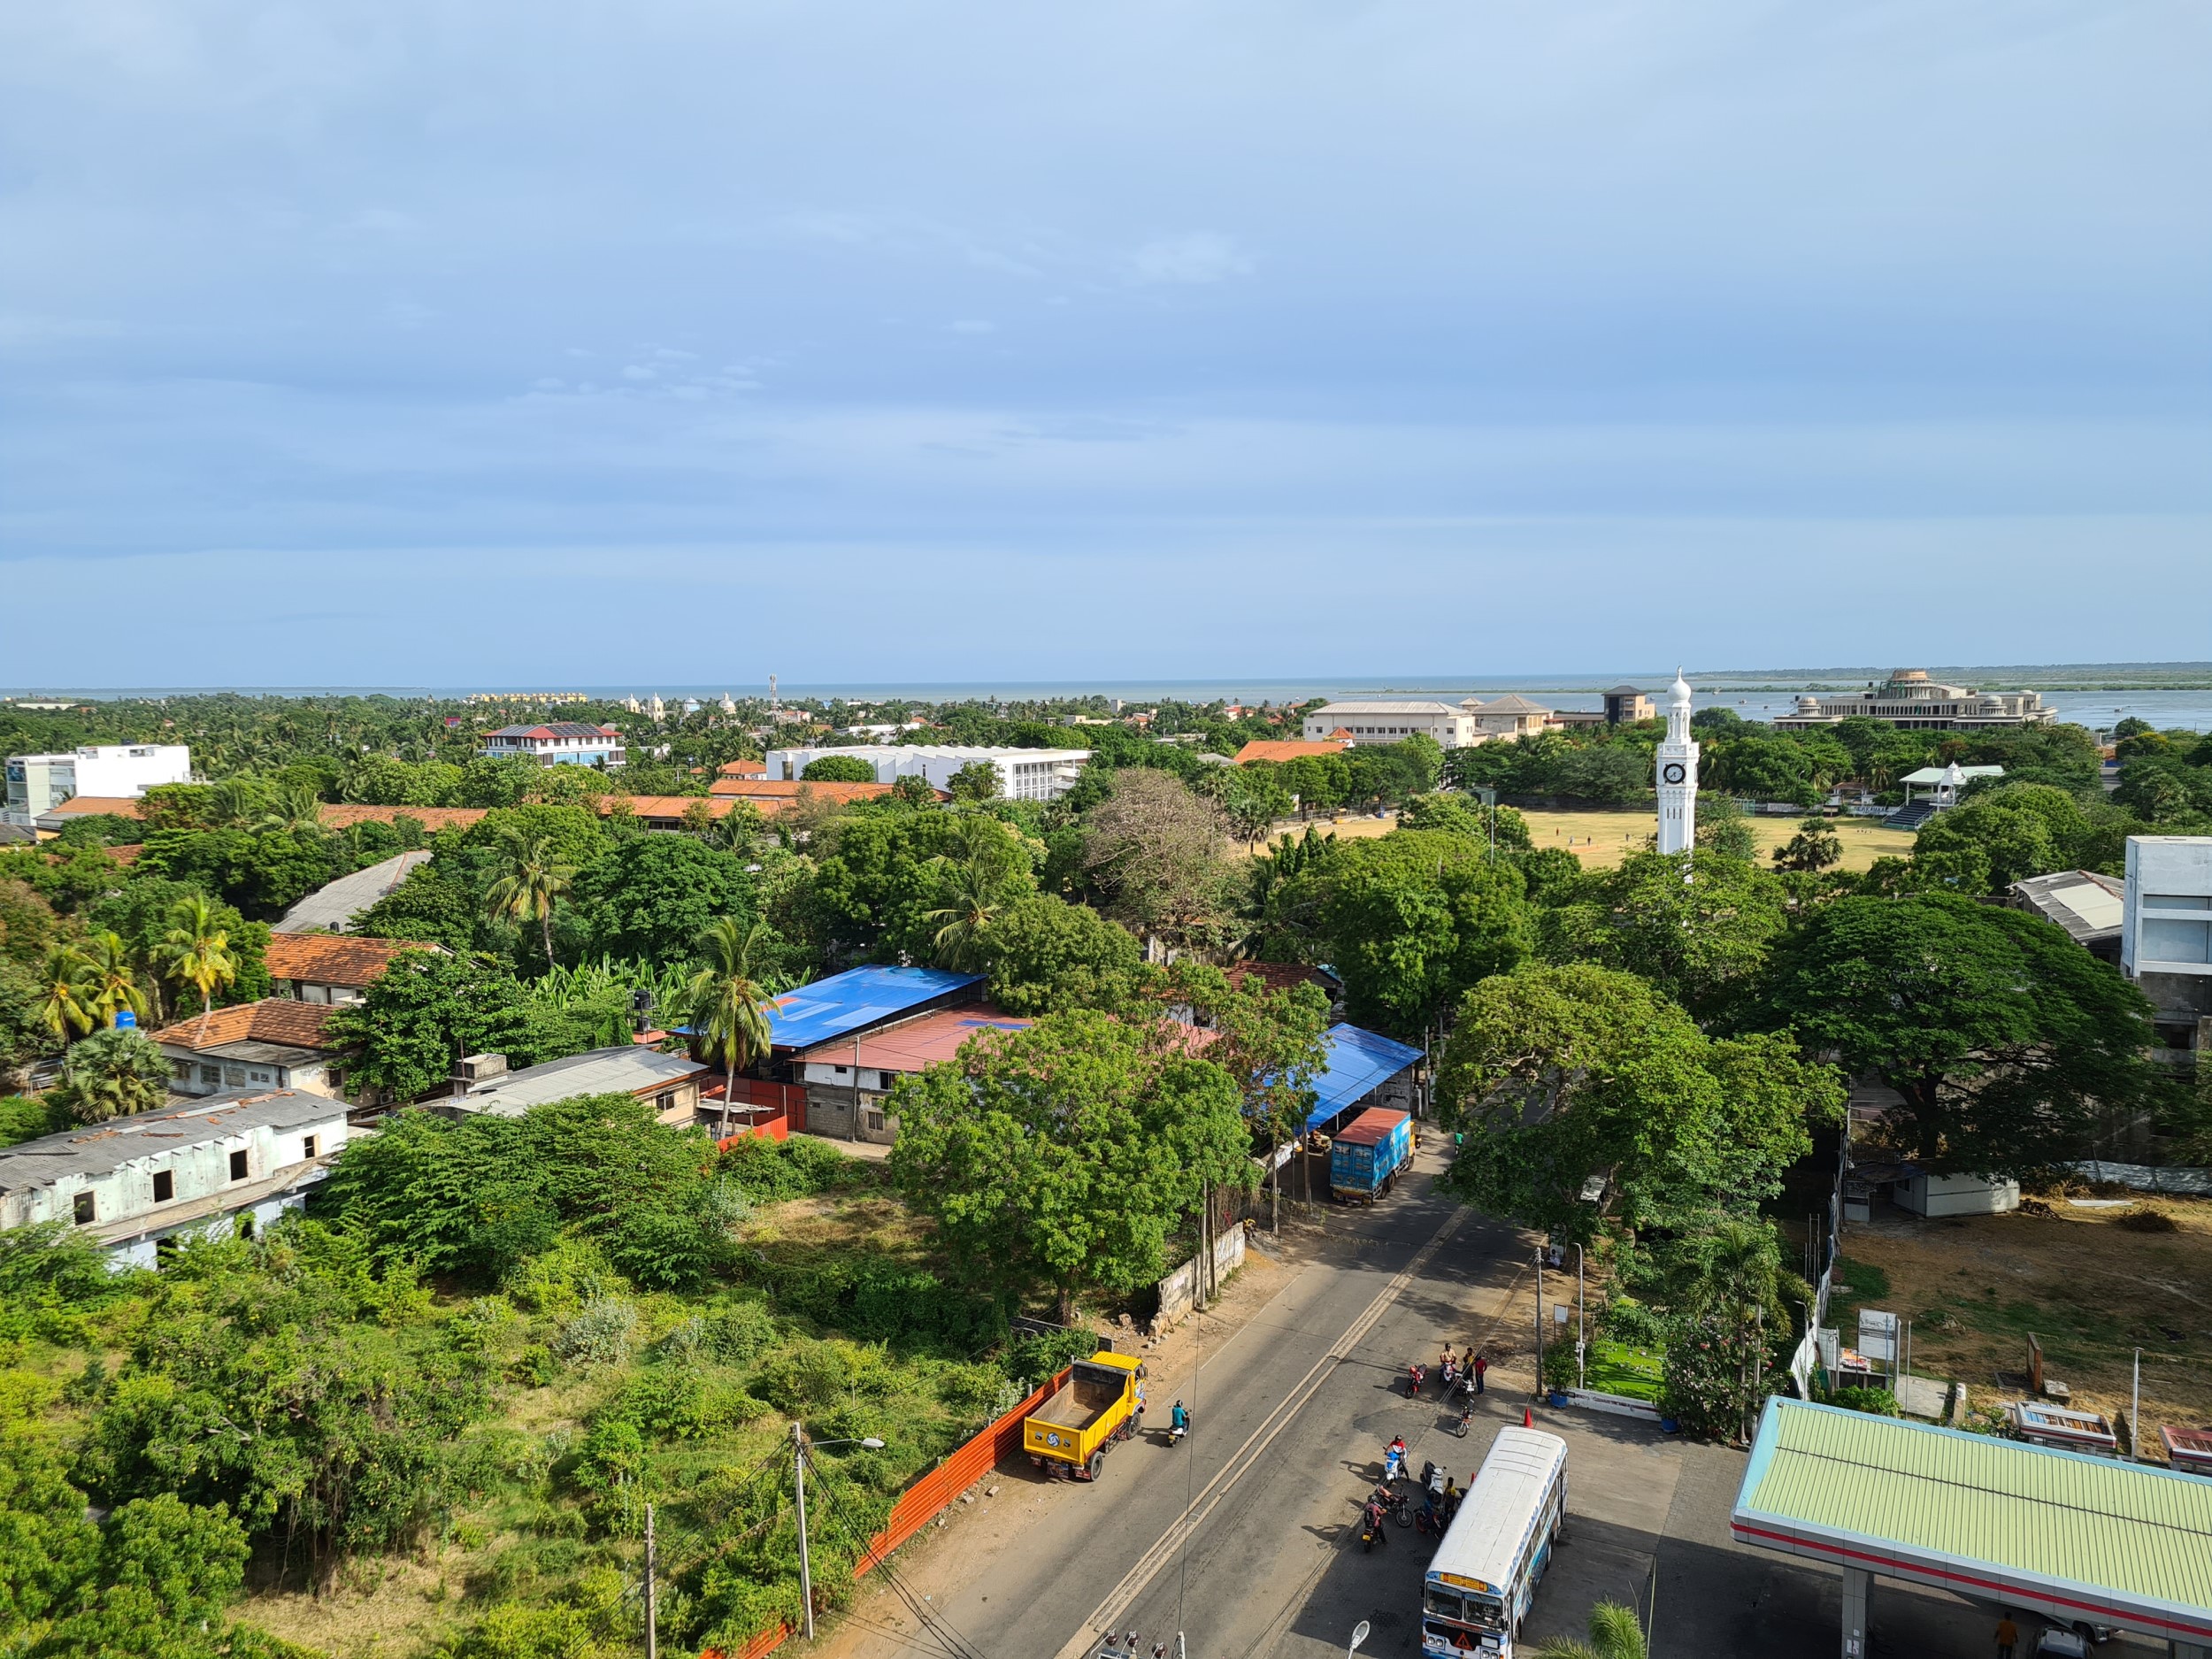 Home Sri Lanka Istock rondreis vakantie original Asia jaffna city